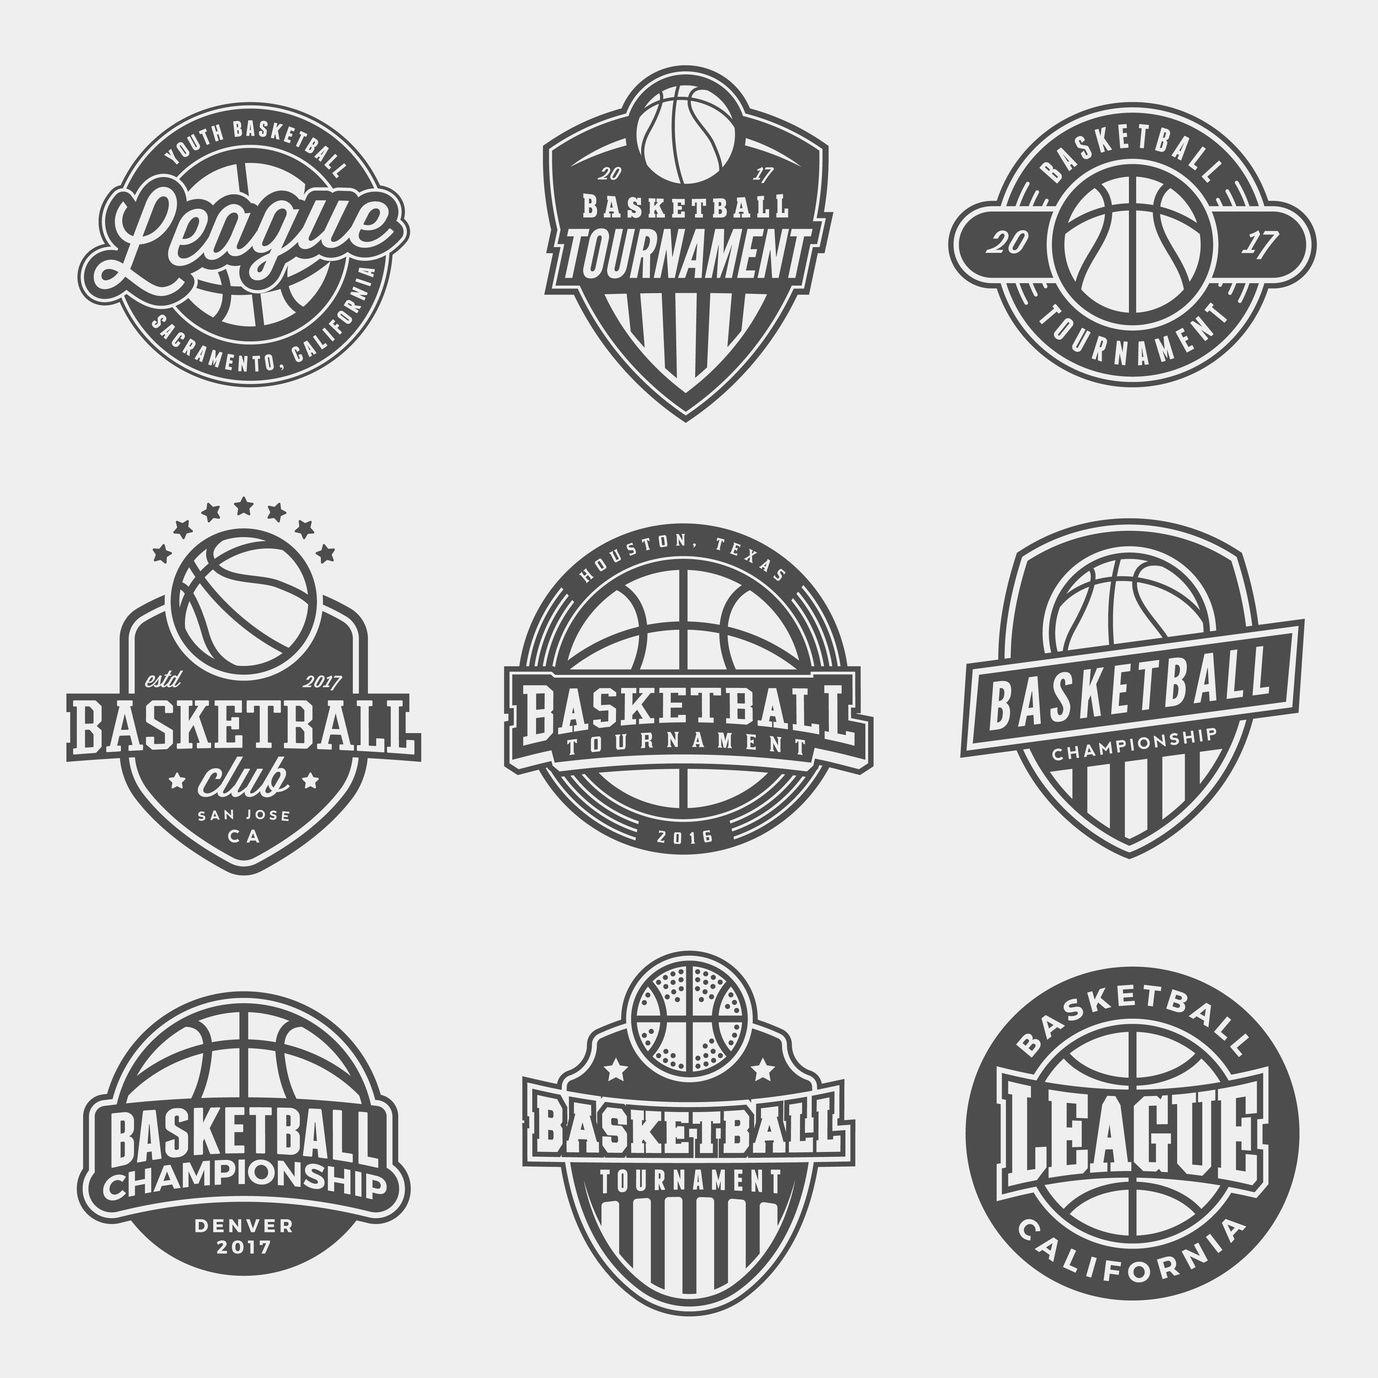 Create Logo - How to Create a Fun Basketball Logo • Online Logo Maker's Blog